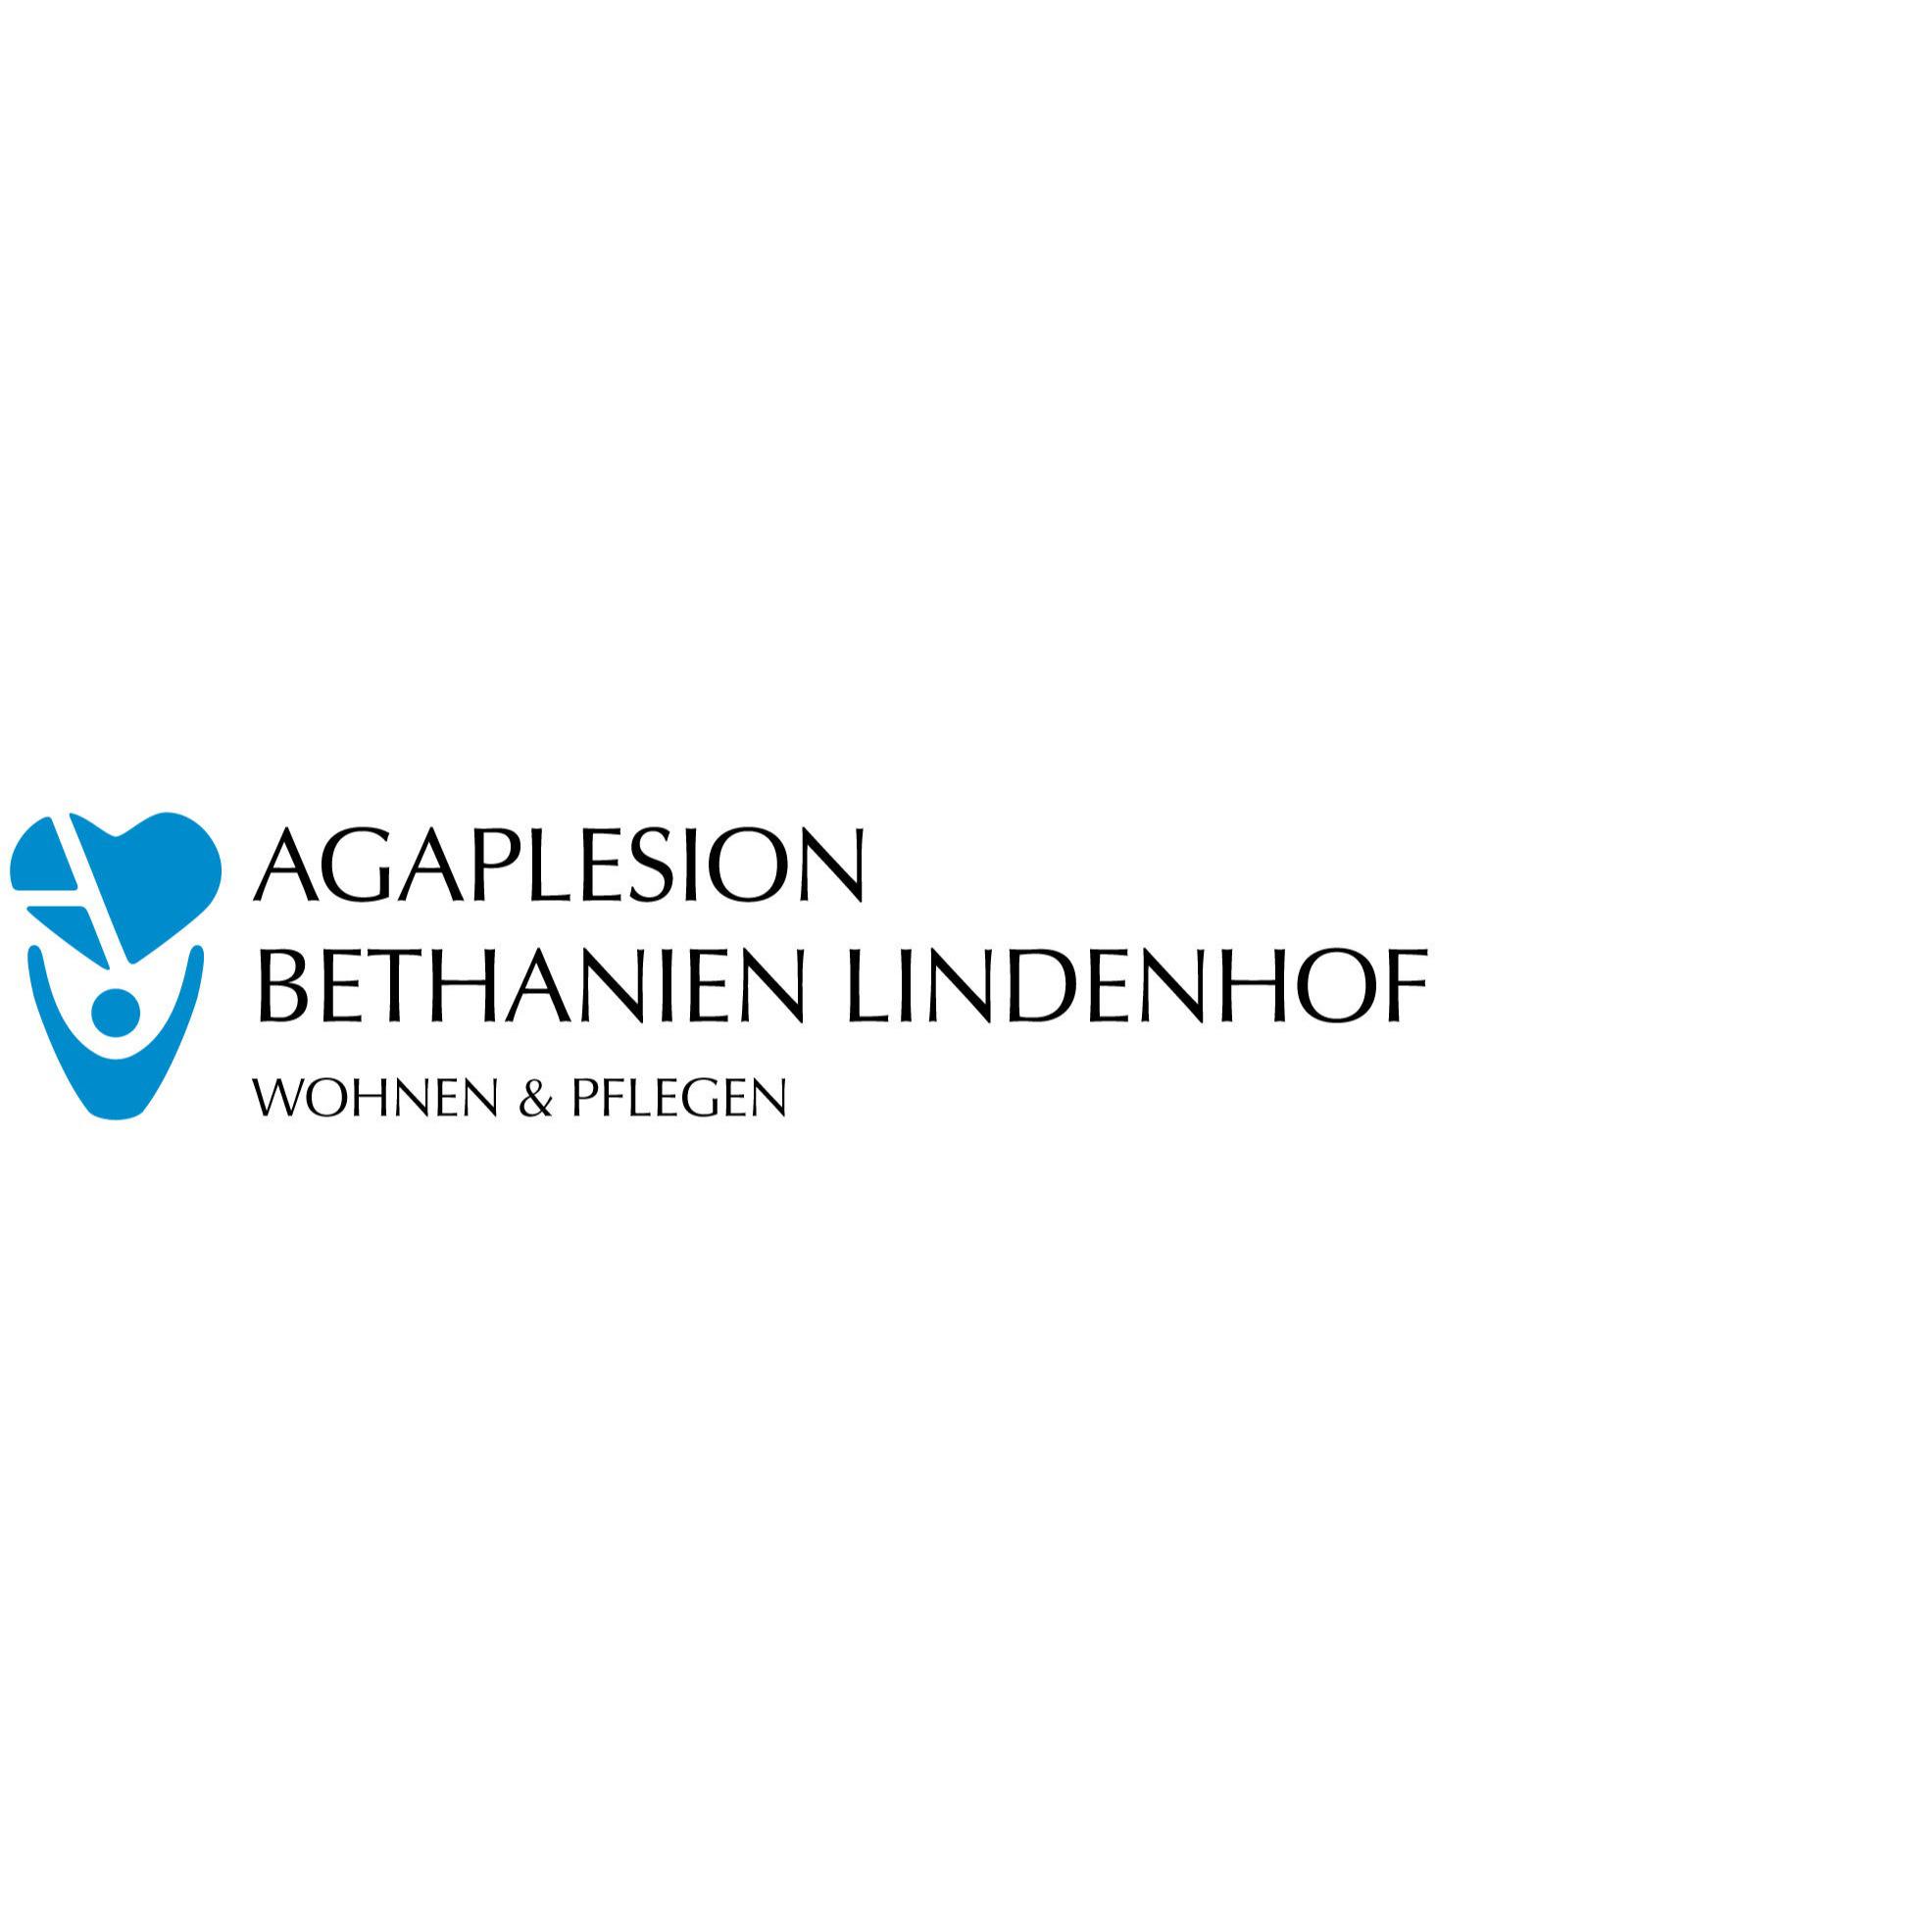 AGAPLESION BETHANIEN LINDENHOF in Heidelberg - Logo